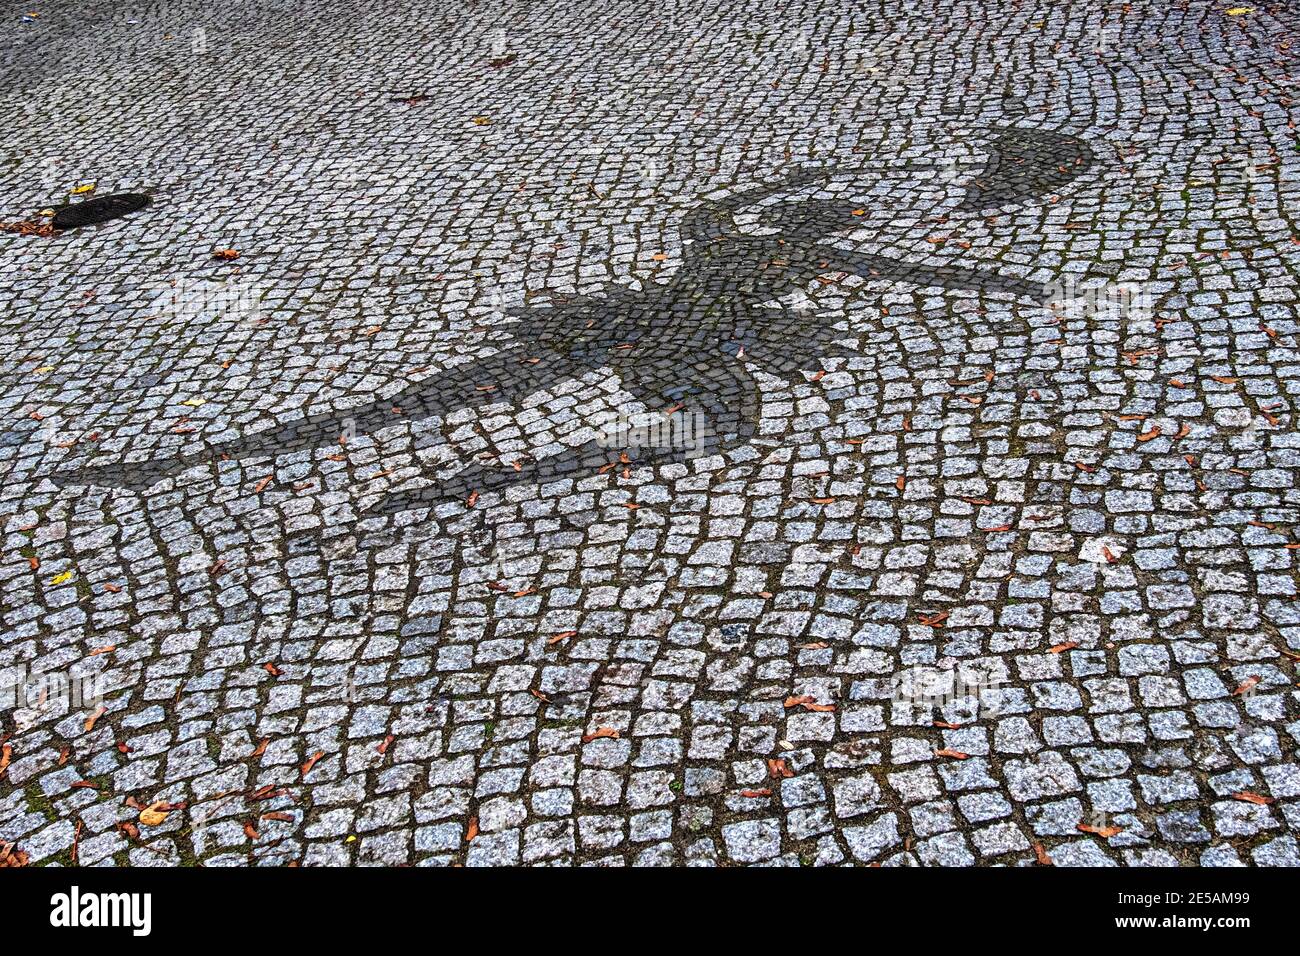 Se tilbage spade Kenya Heinrich Seidel Elementary school entance with ballerina mosaic in cobbled  paving, Ramlerstraße 9/10, Gesundbrunnen,Berlin Stock Photo - Alamy